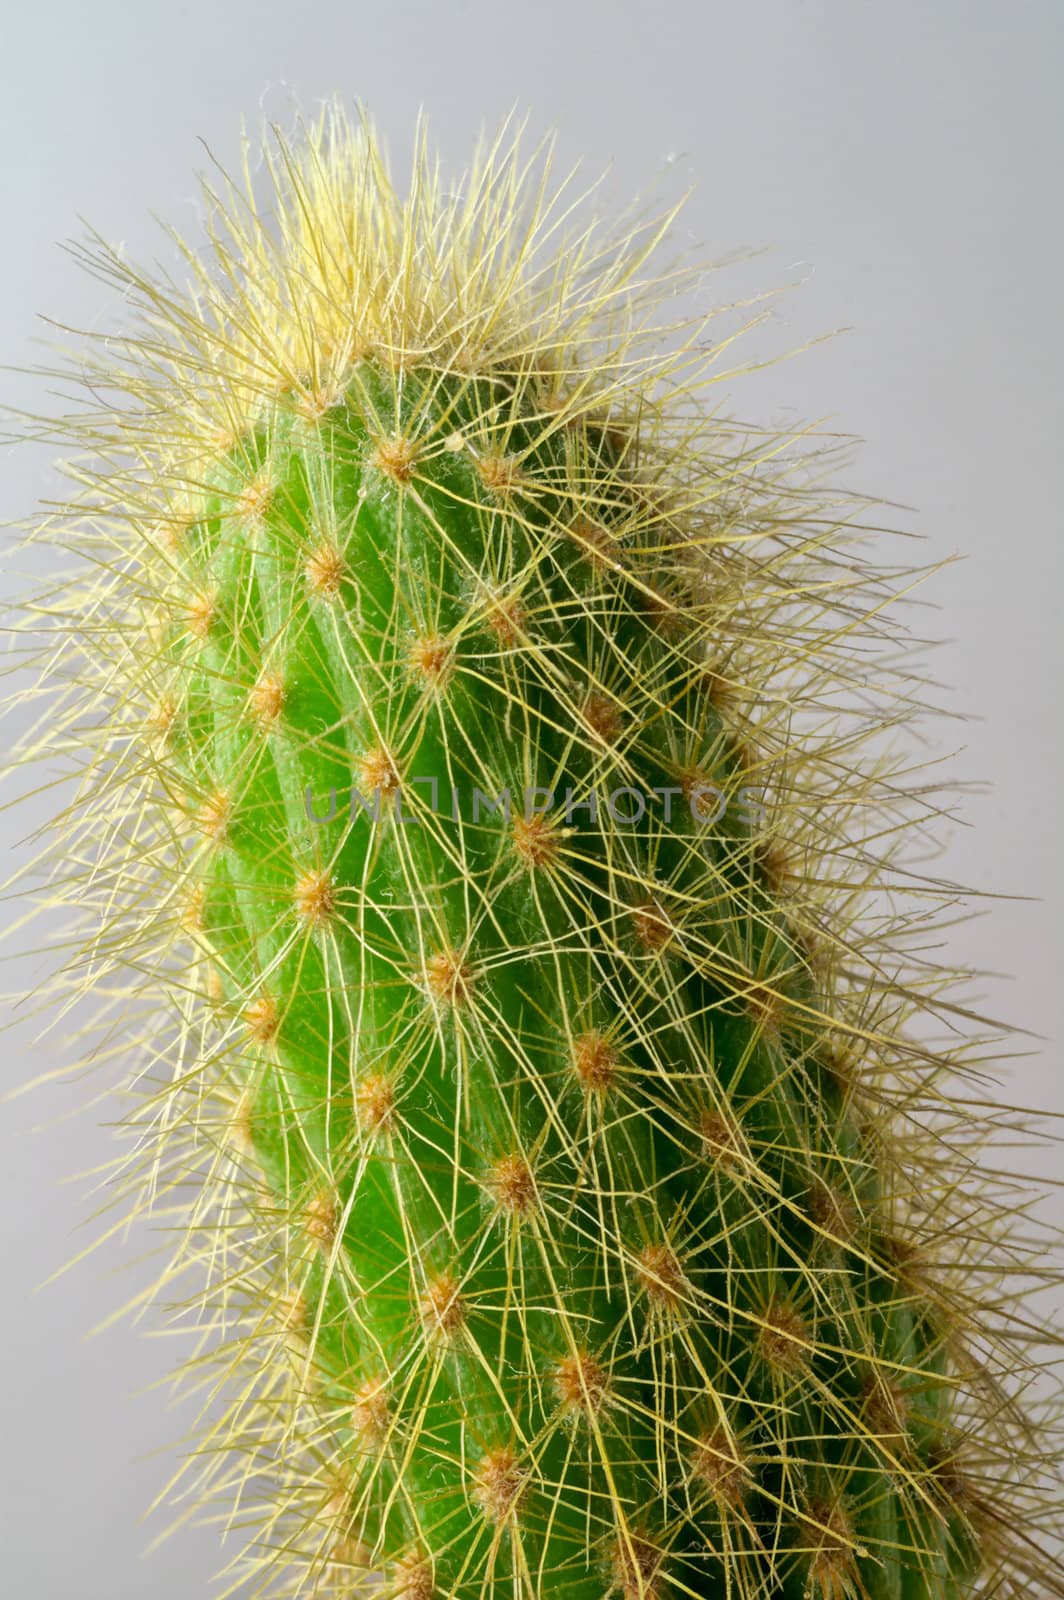 Cactus: a closeup view